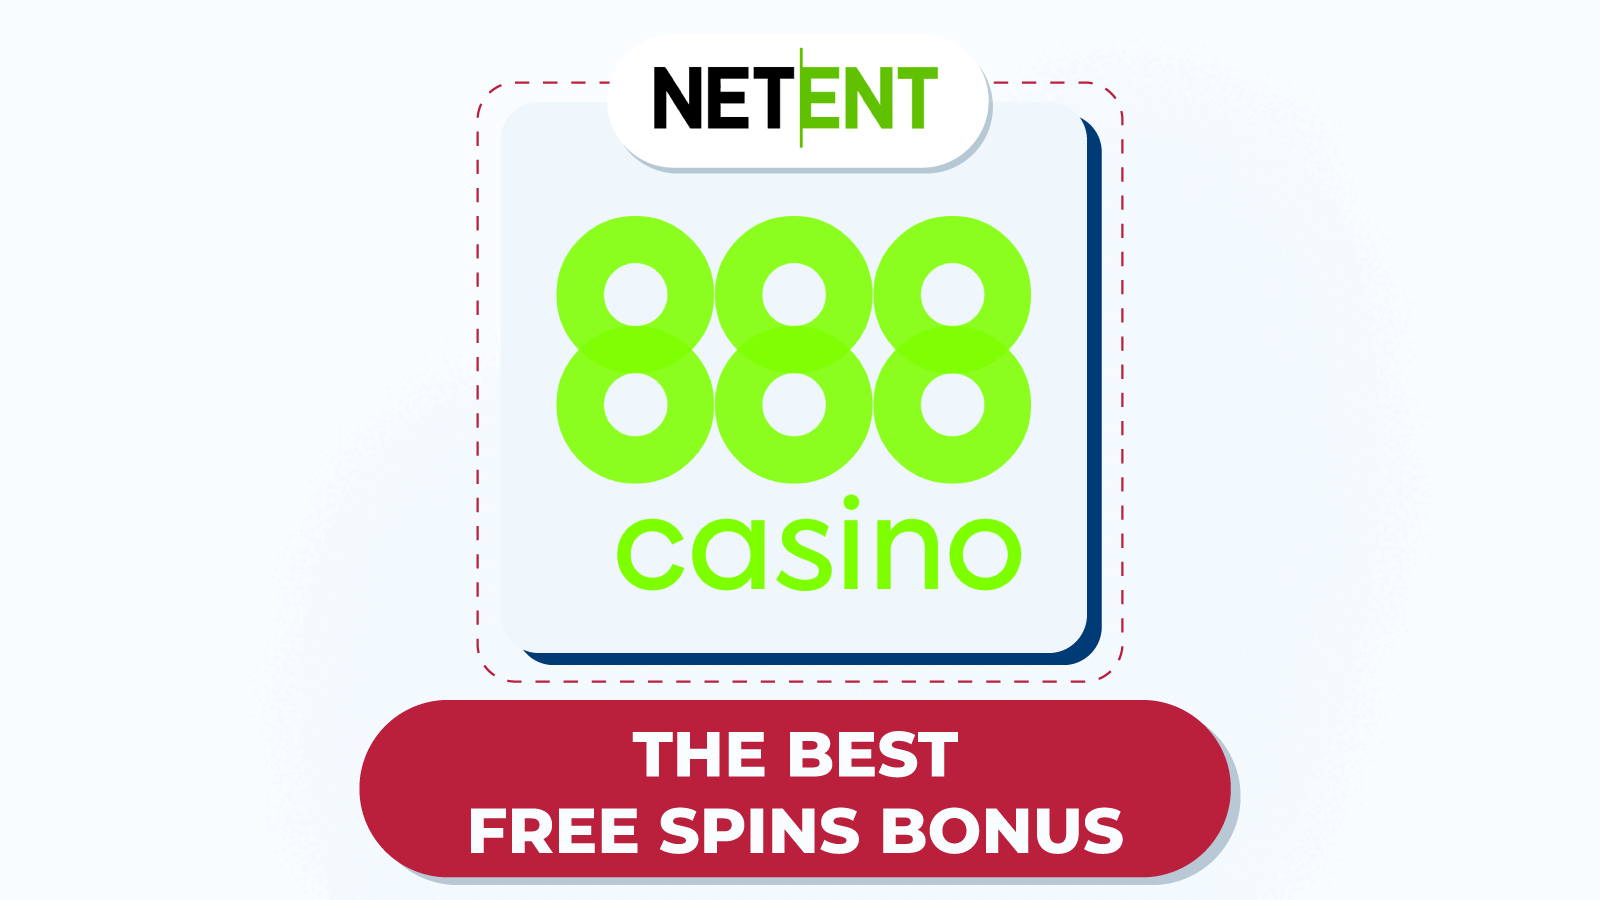 888 Casino – The best NetEnt free spins bonus